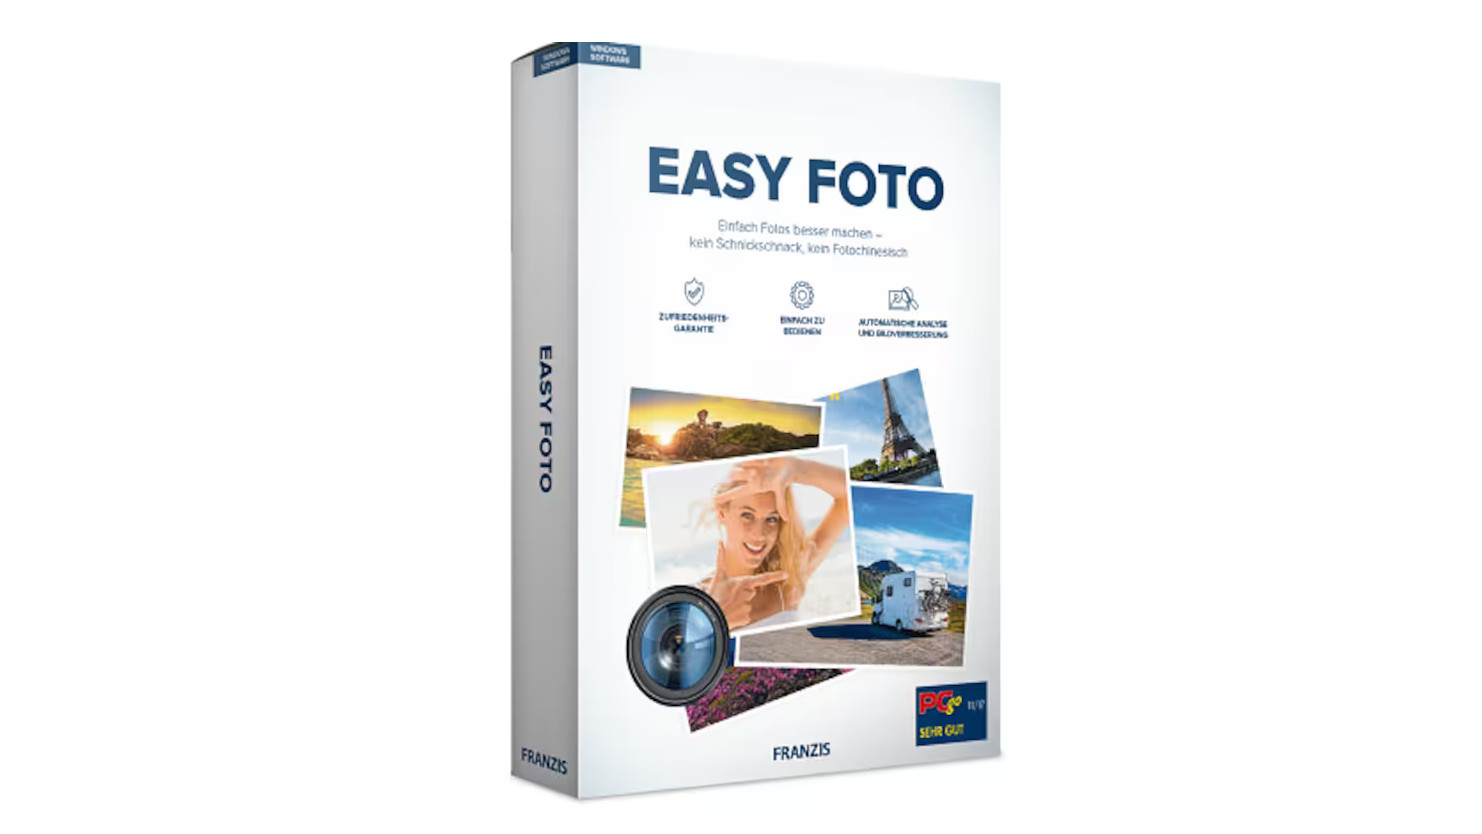 (33.89$) Easy Foto - Project Software Key (Lifetime / 1 PC)